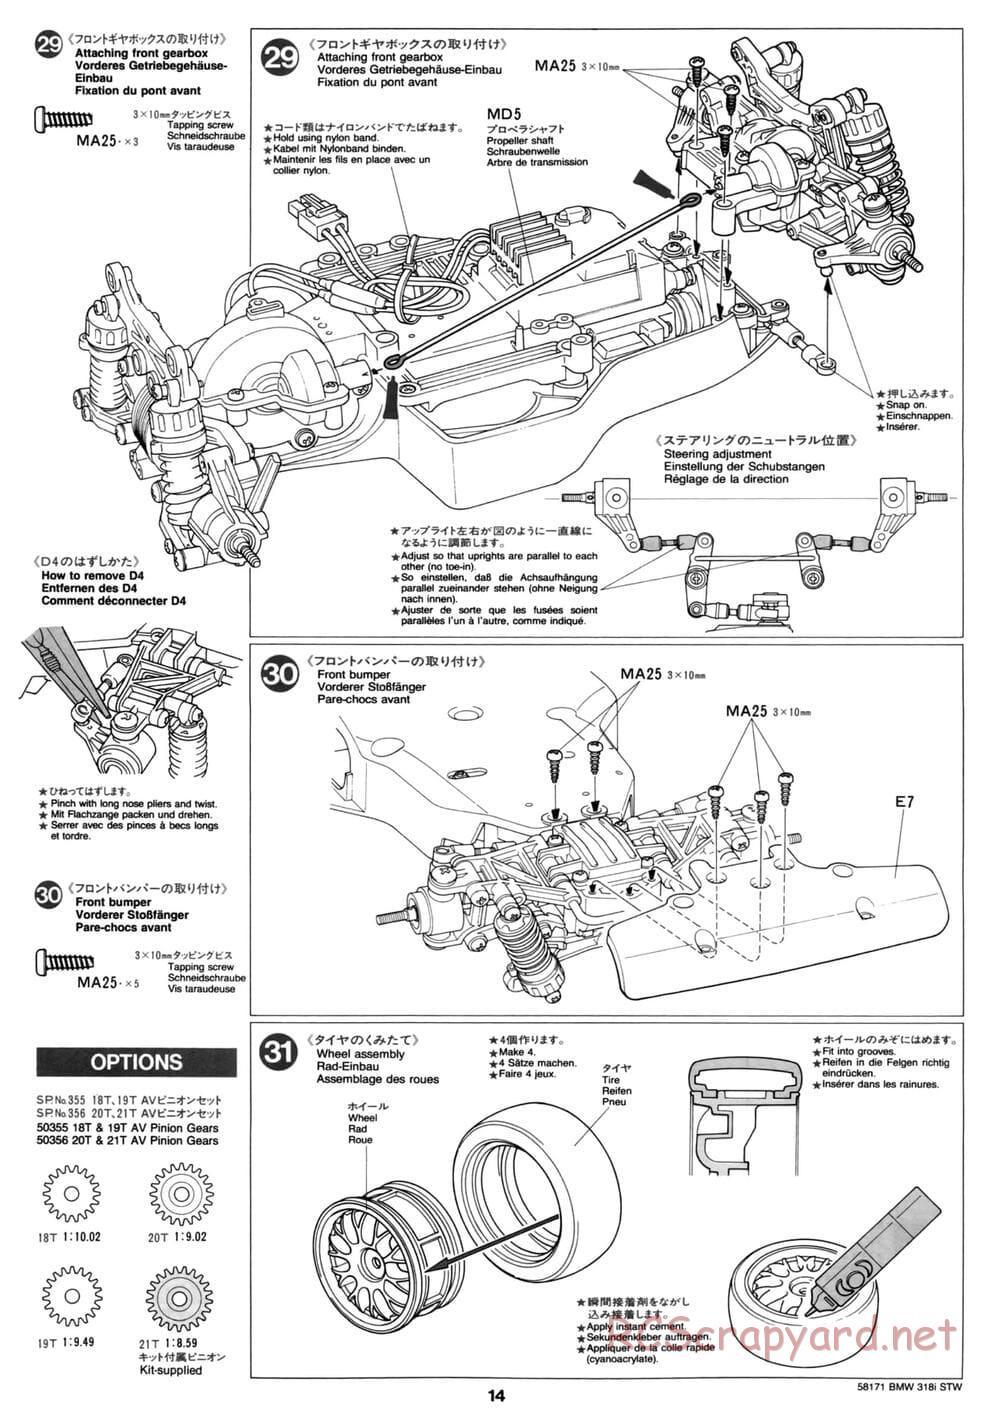 Tamiya - BMW 318i STW - TA-02 Chassis - Manual - Page 14